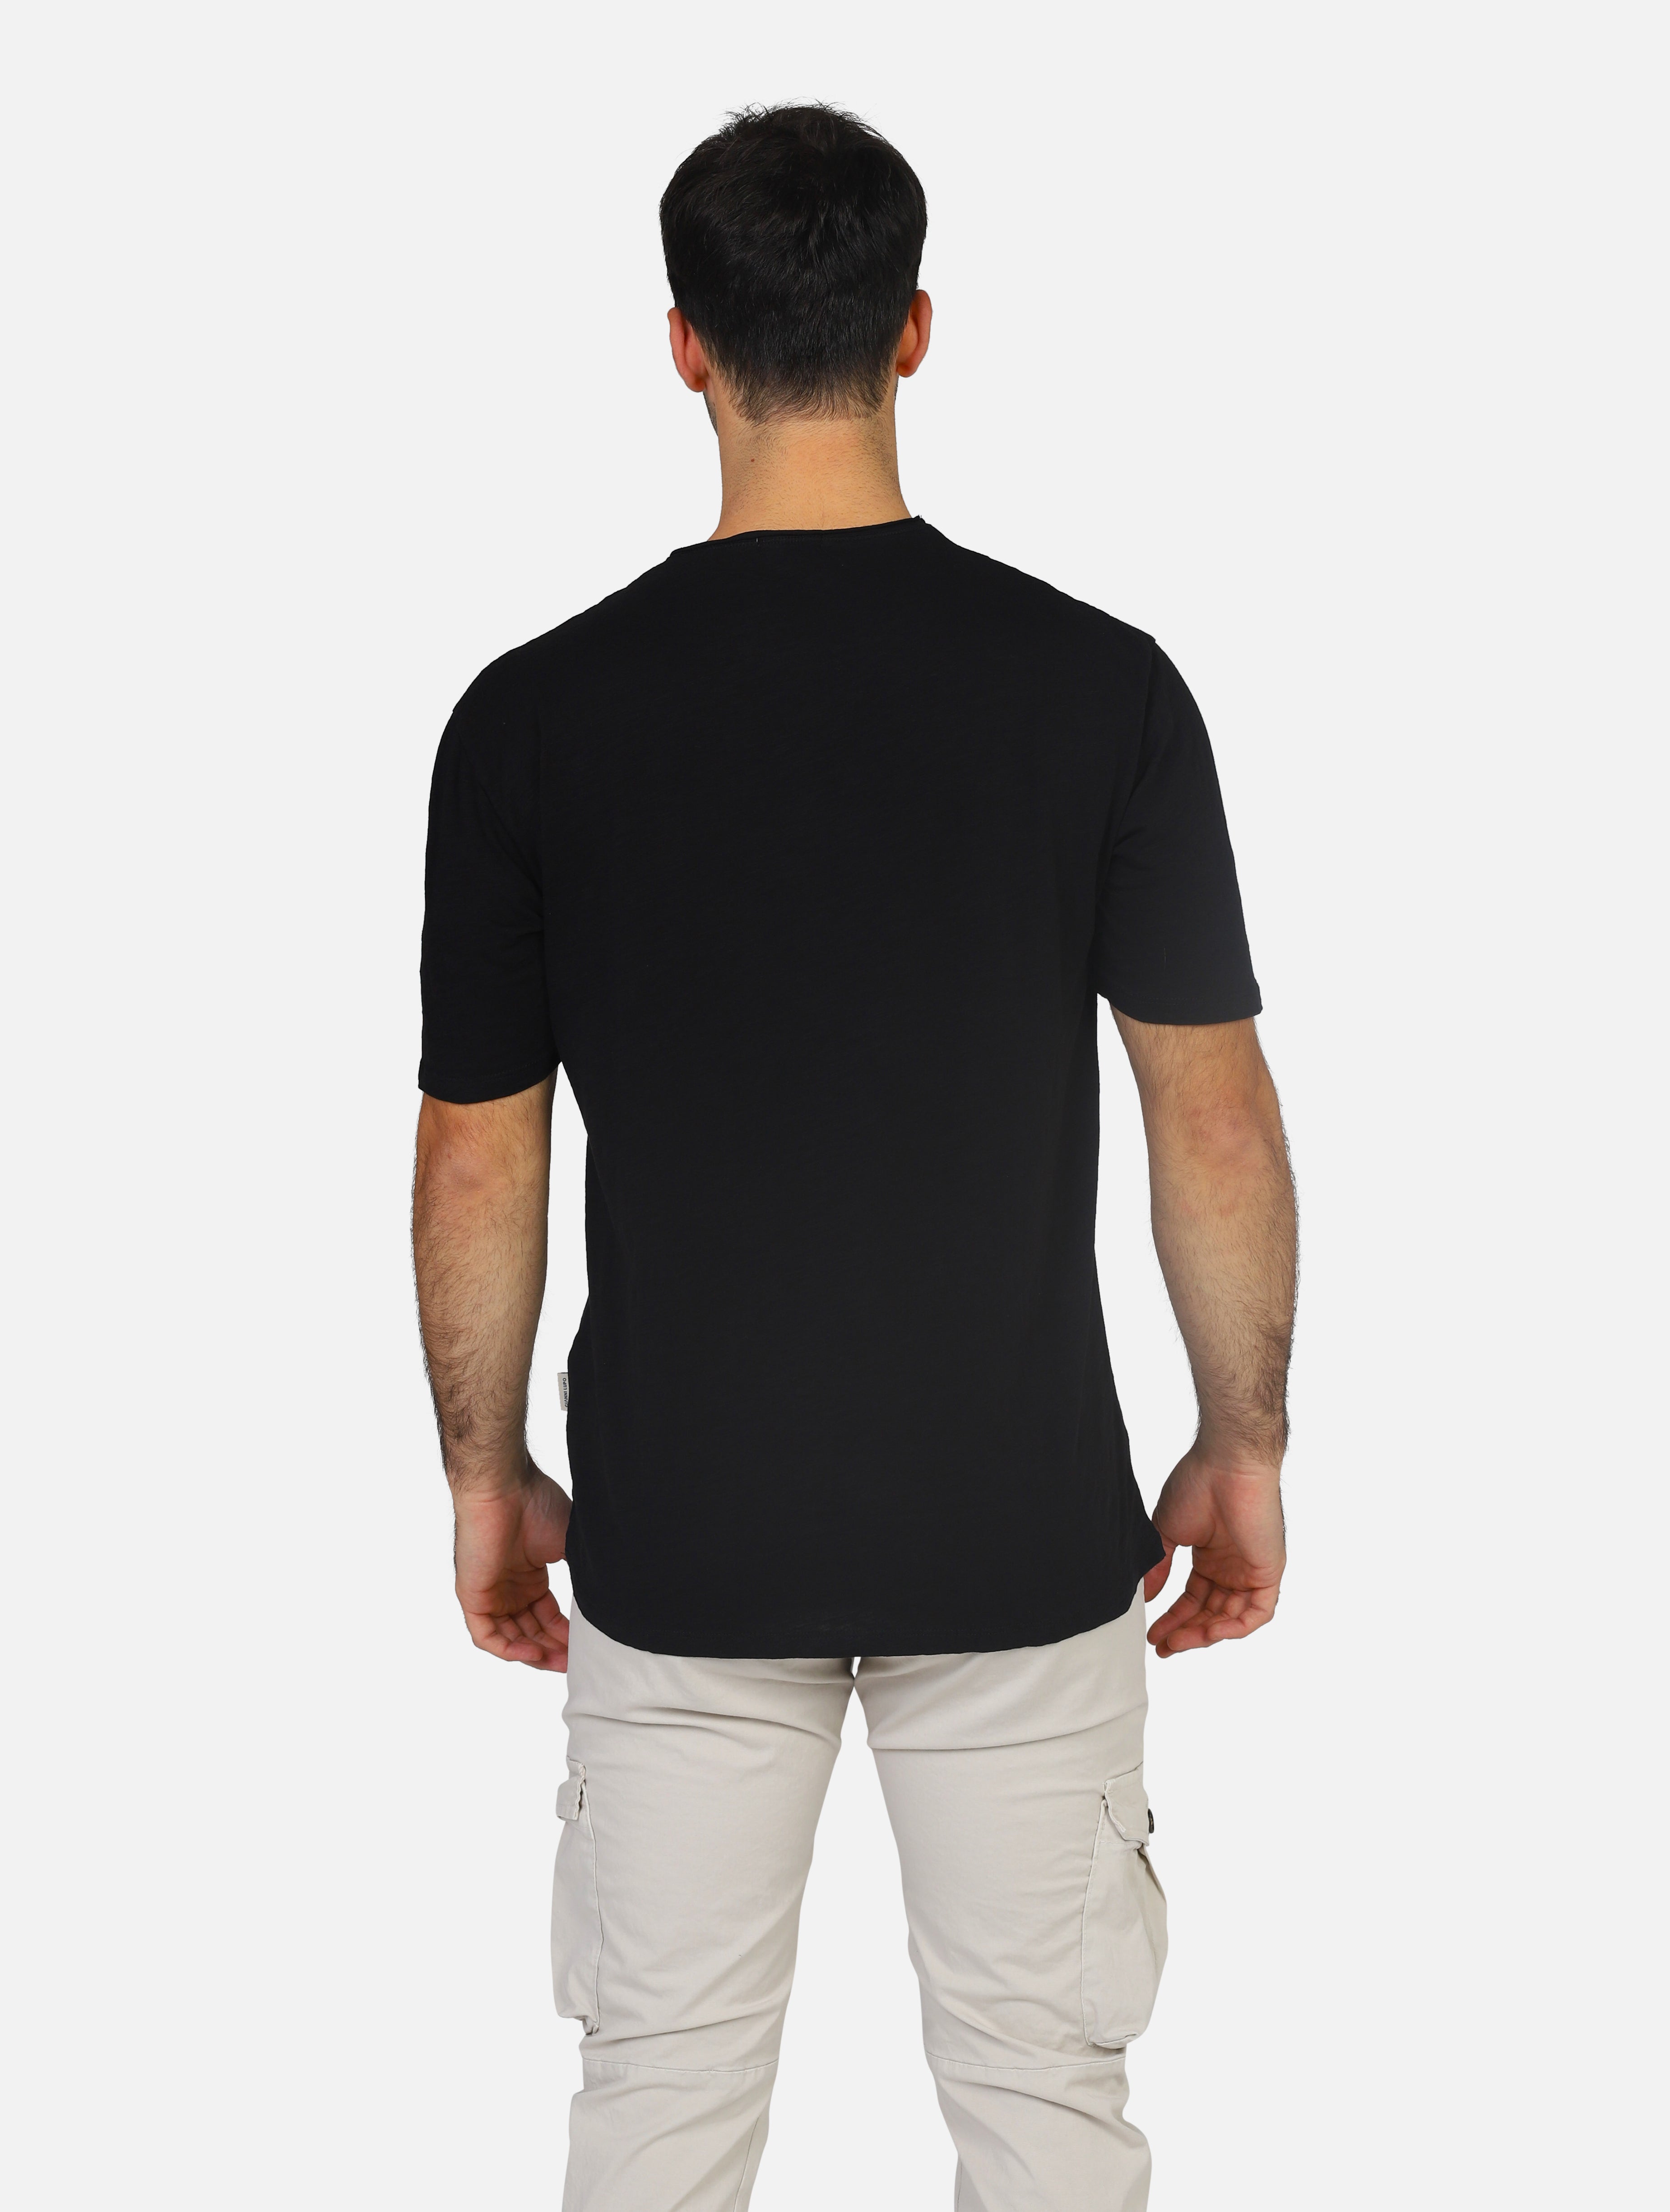 T-shirt gianni lupo  black uomo  - 3